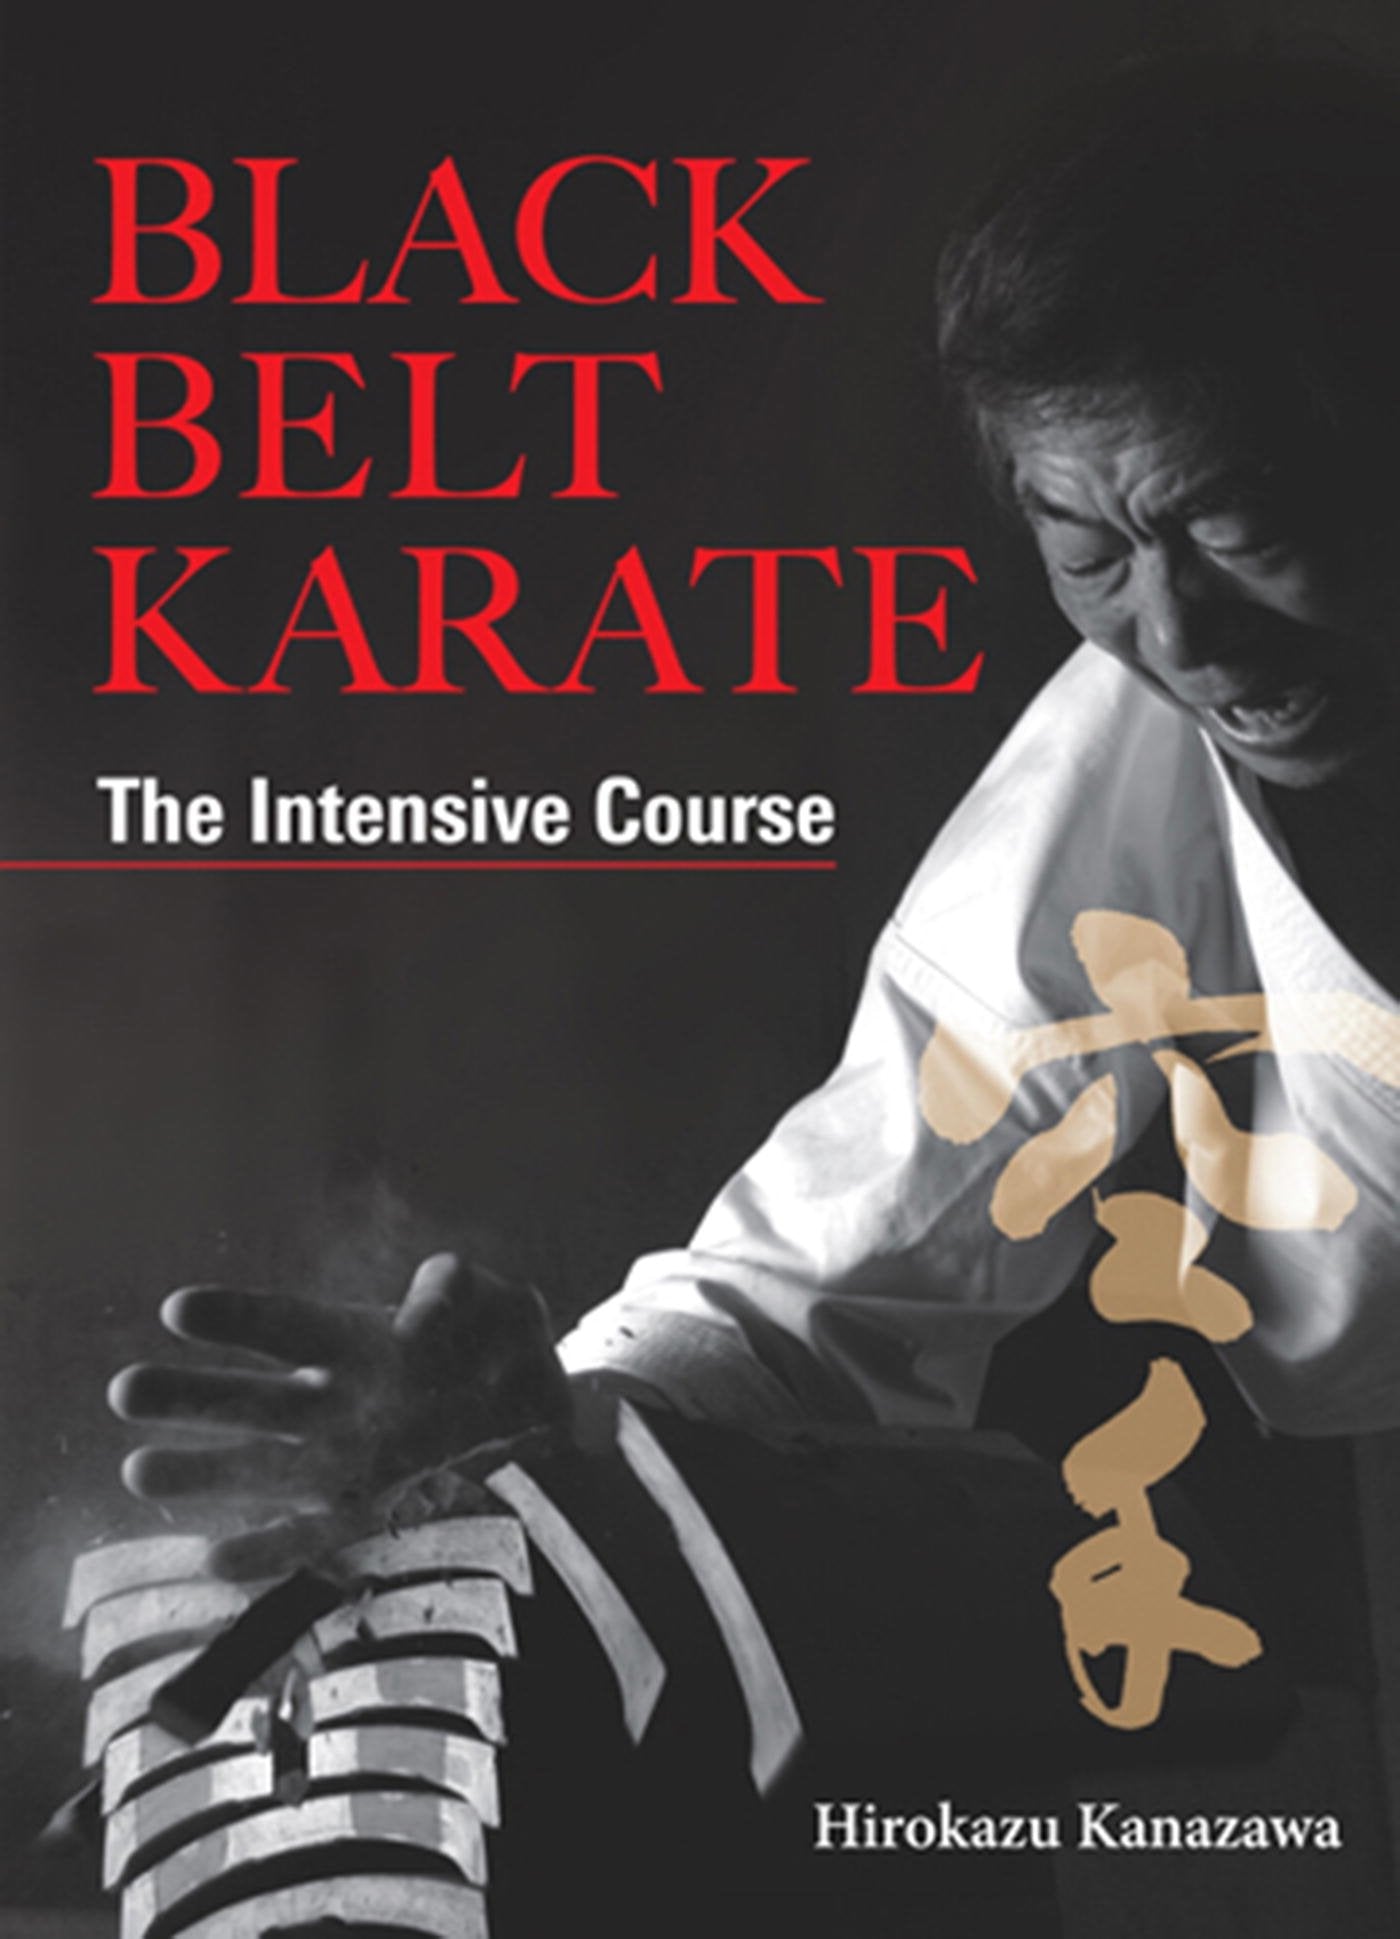 Black Belt Karate: The Intensive Course (Hardcover) Book by Hirokazu Kanazawa - Budovideos